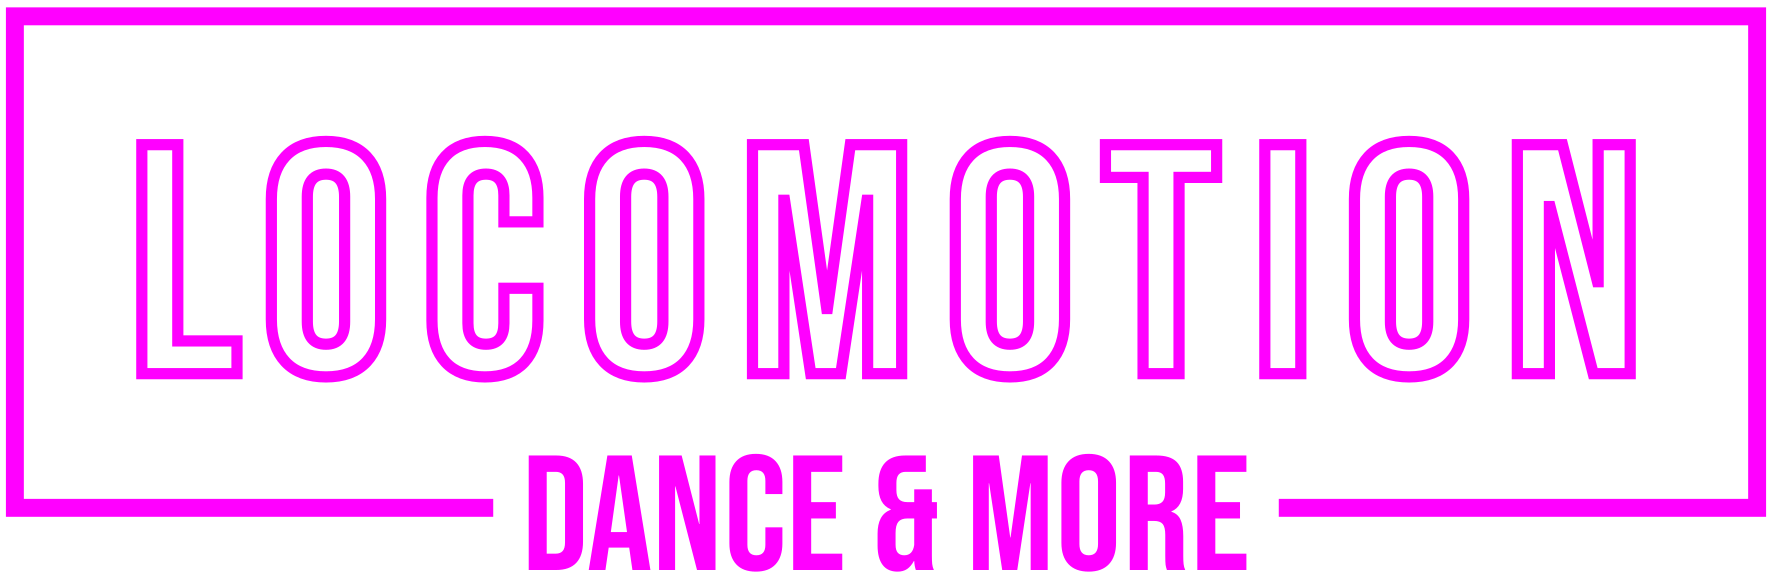 Locomotion Dance & More